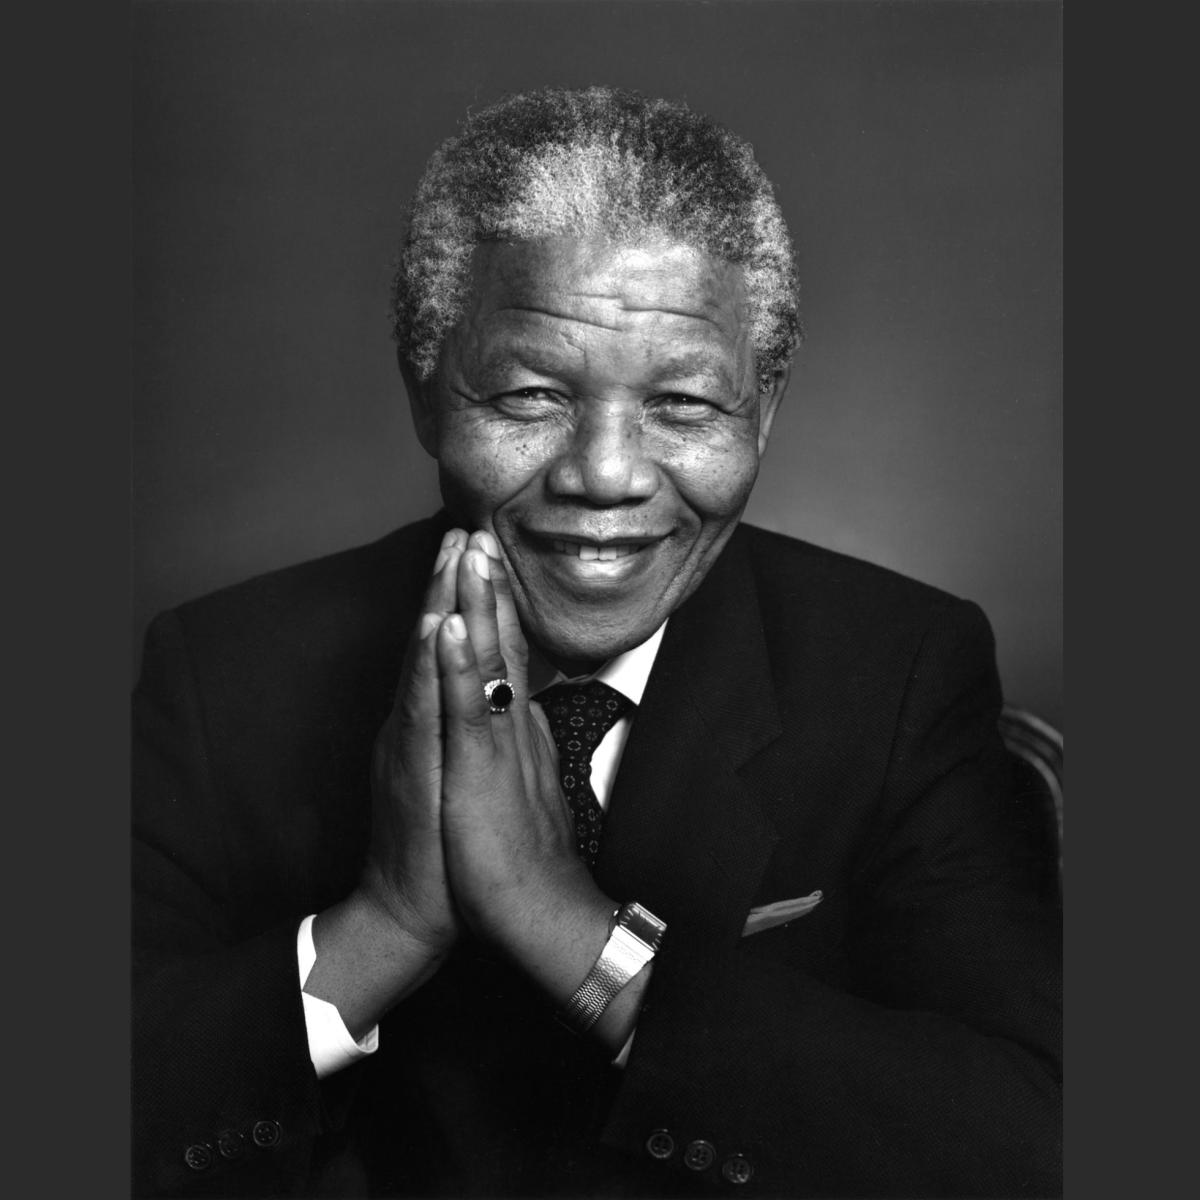 Photo of Nelson Mandela to represent Black History Month